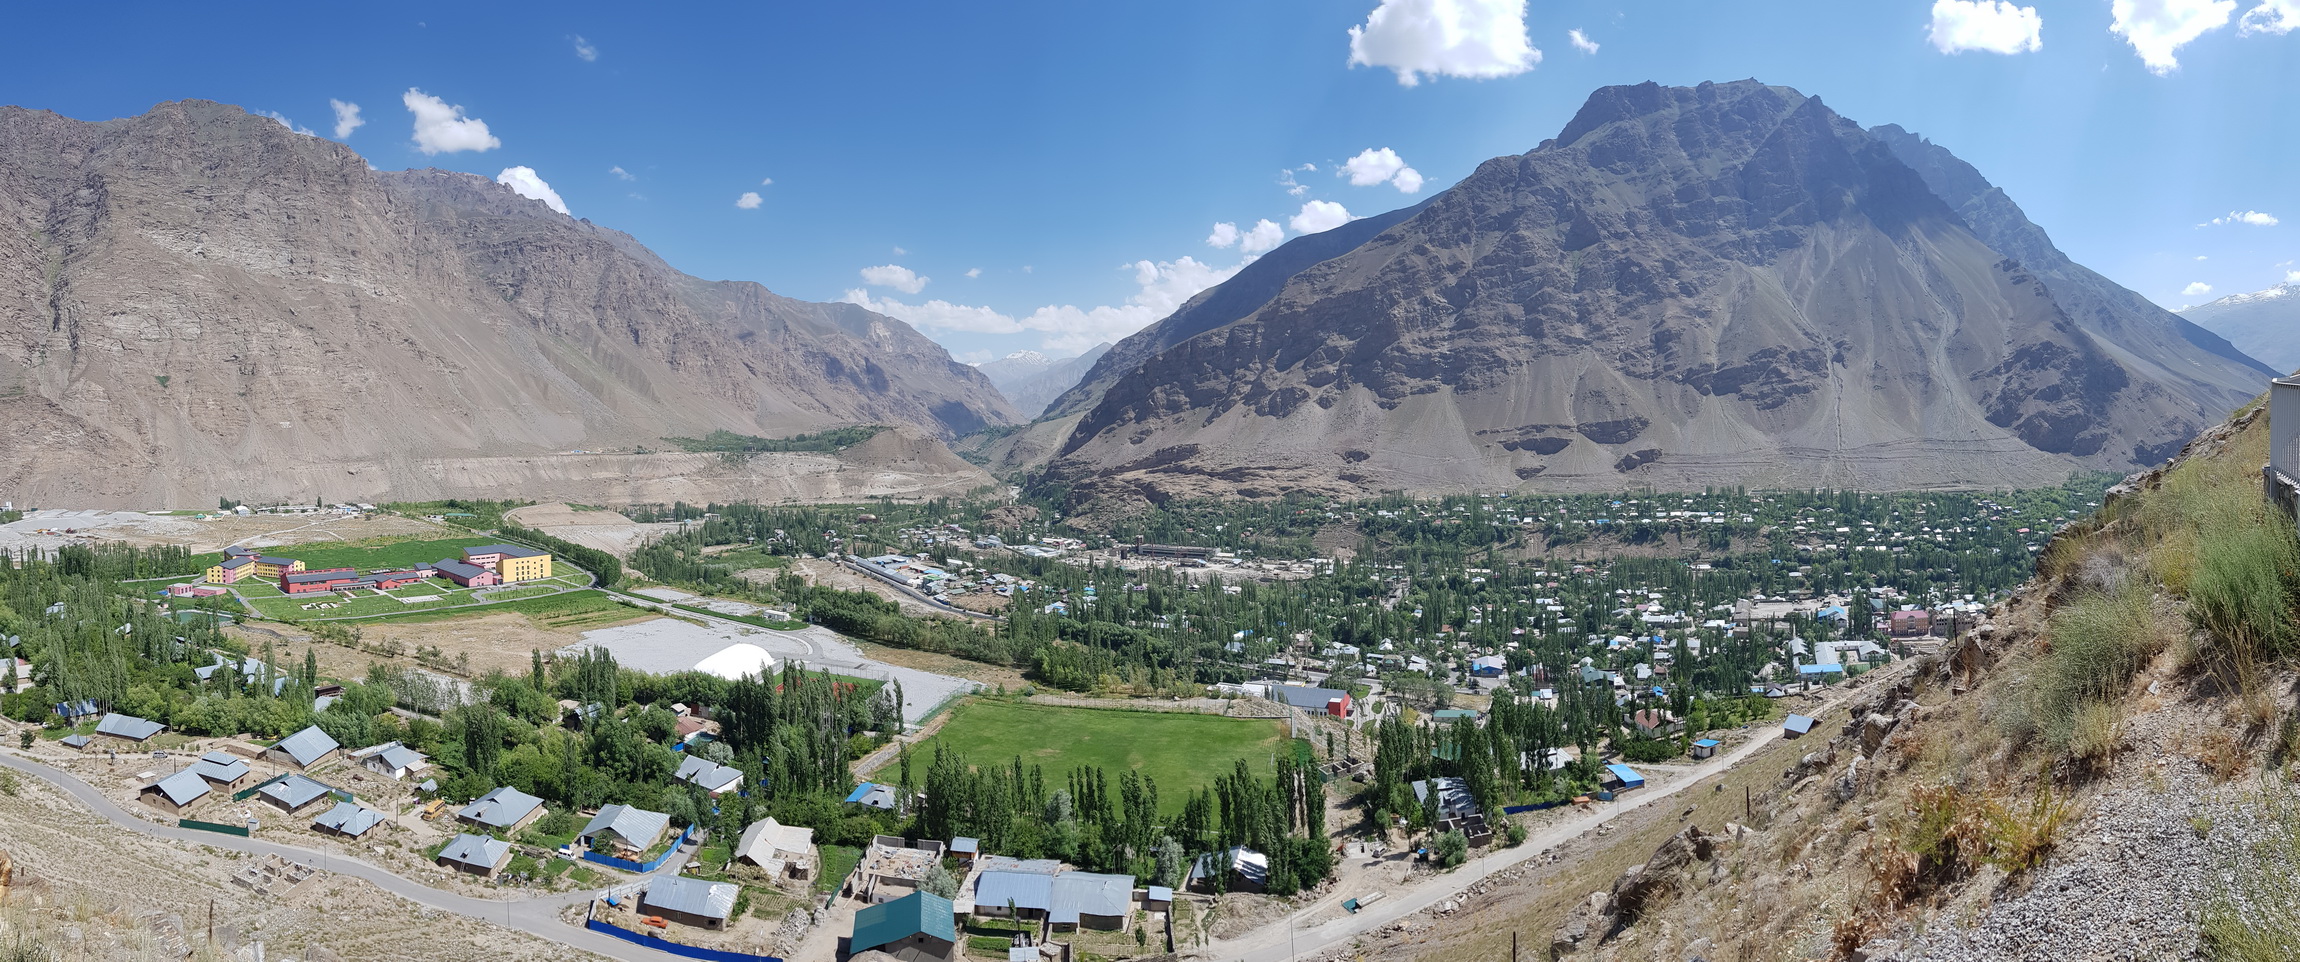 Khorog - the administrative center of Gorno-Badakhshan Autonomous Region. Photo: akdn.org